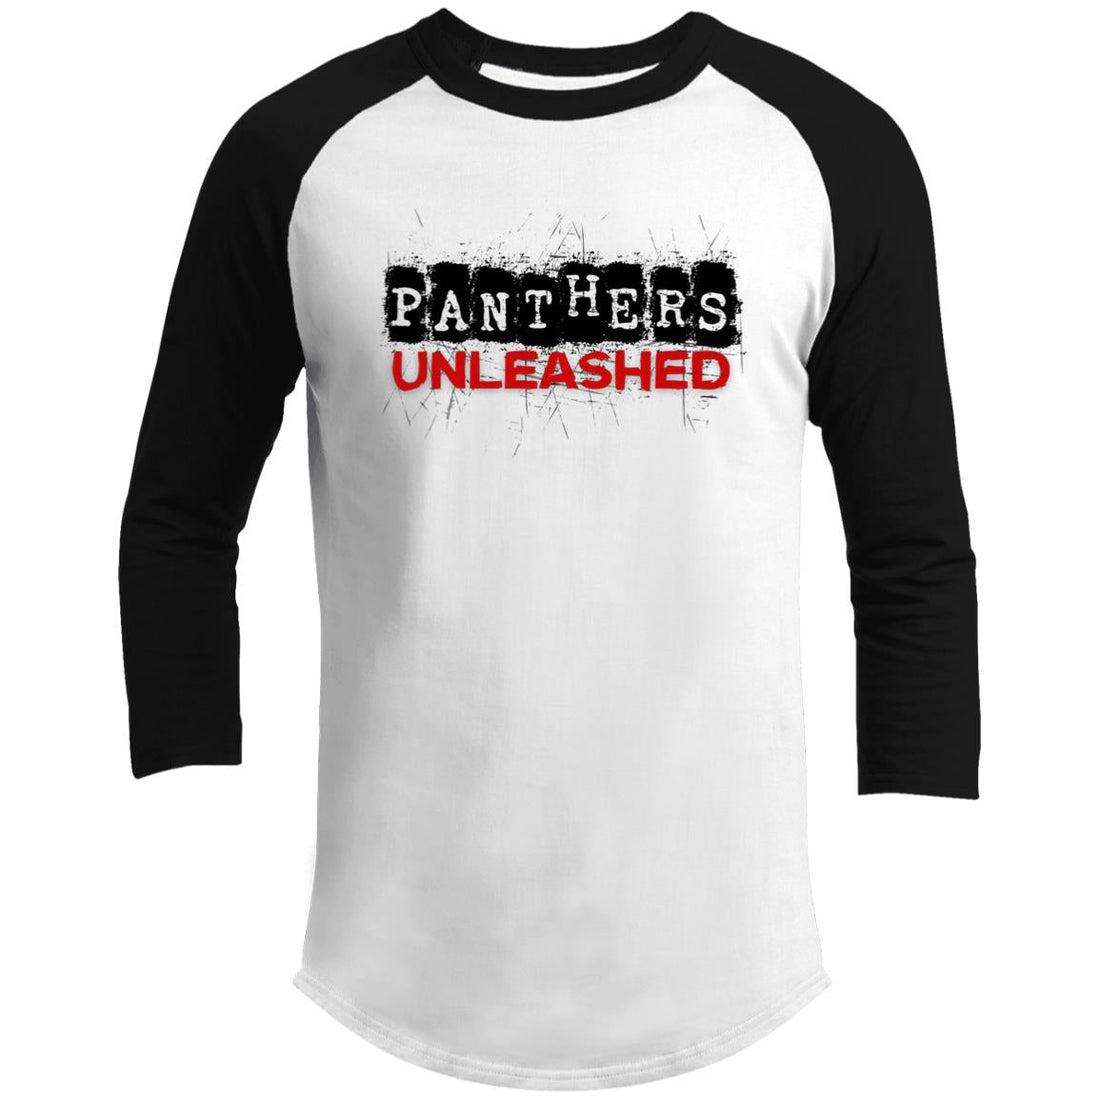 Panthers Unleashed T200 3/4 Raglan Sleeve Shirt - T-Shirts - Positively Sassy - Panthers Unleashed T200 3/4 Raglan Sleeve Shirt